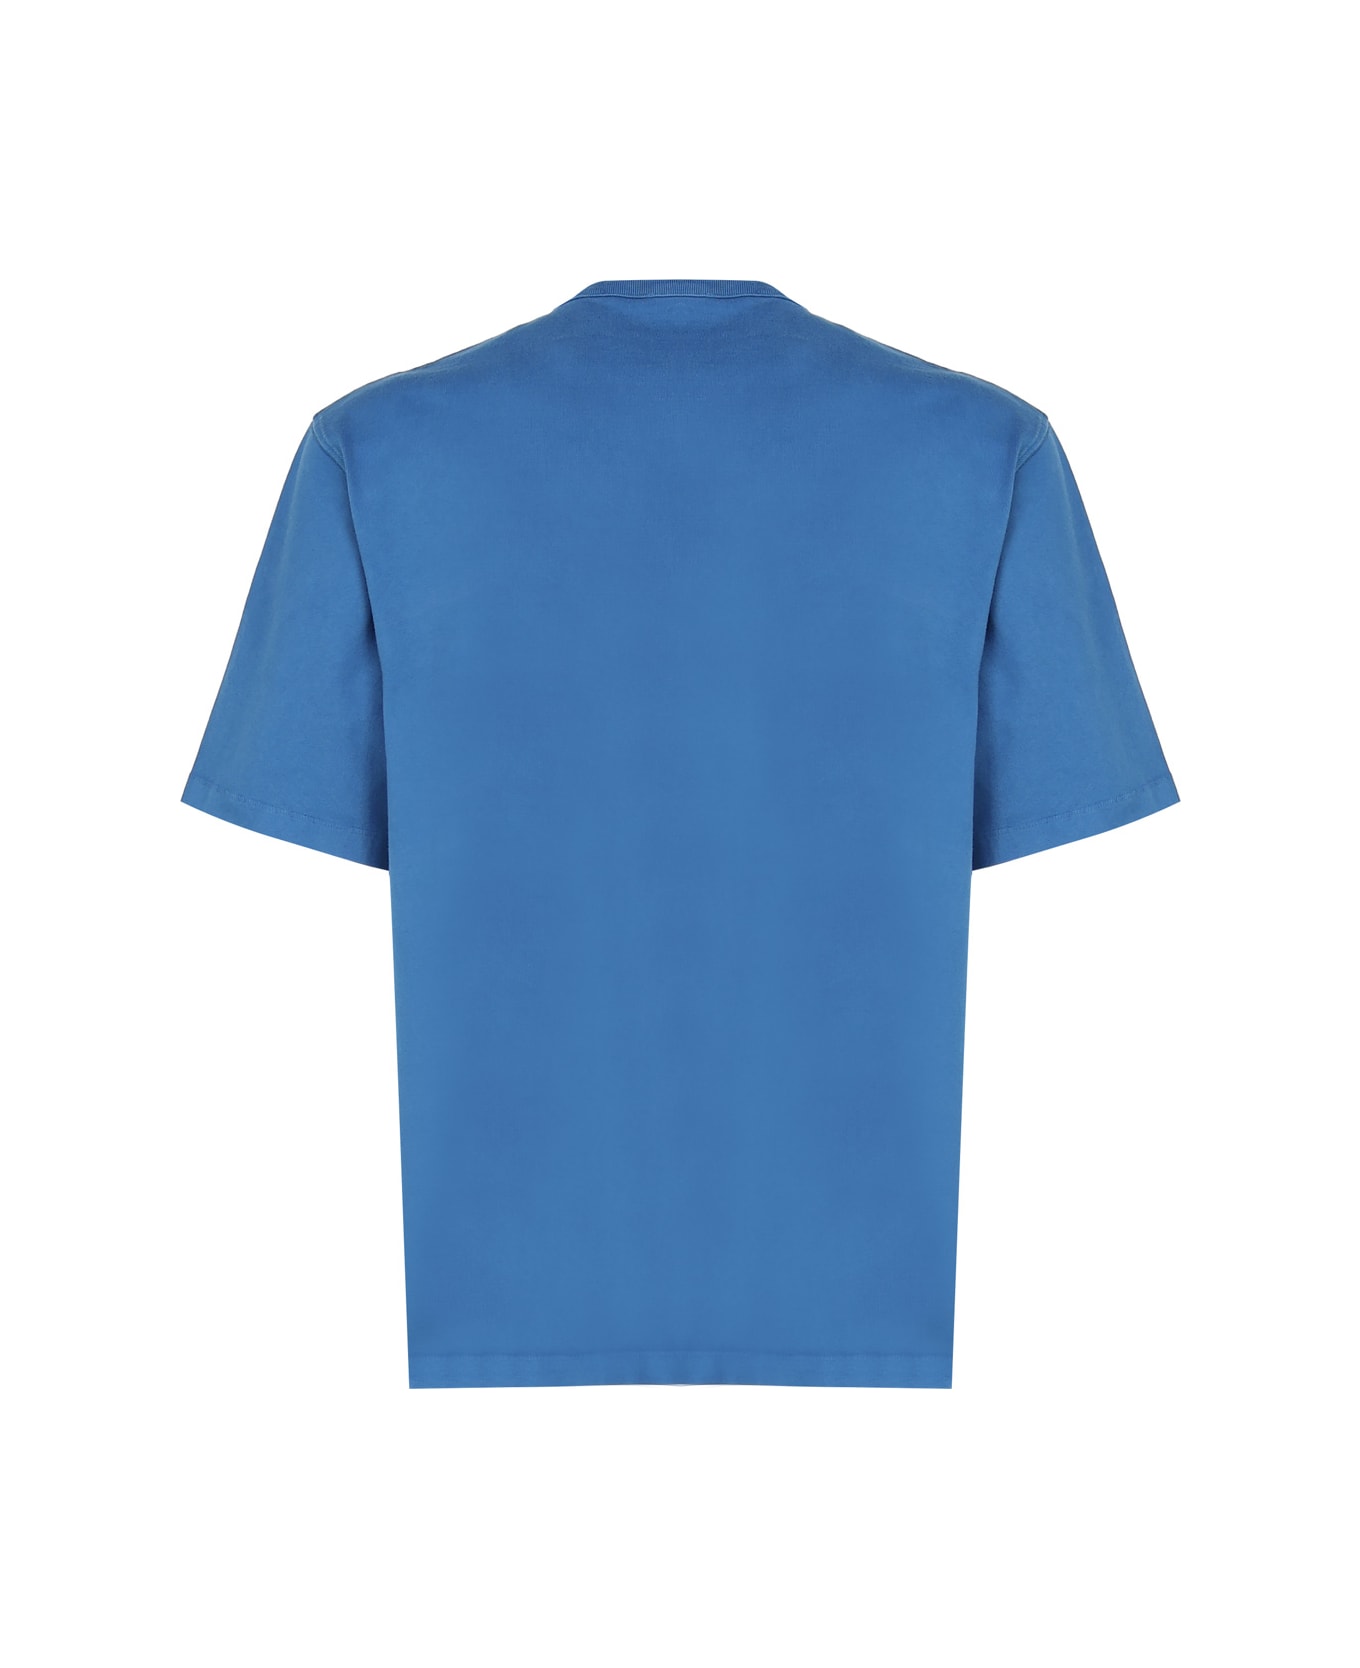 Moncler Genius Moncler X Salehe Bembury T-shirt - Light blue